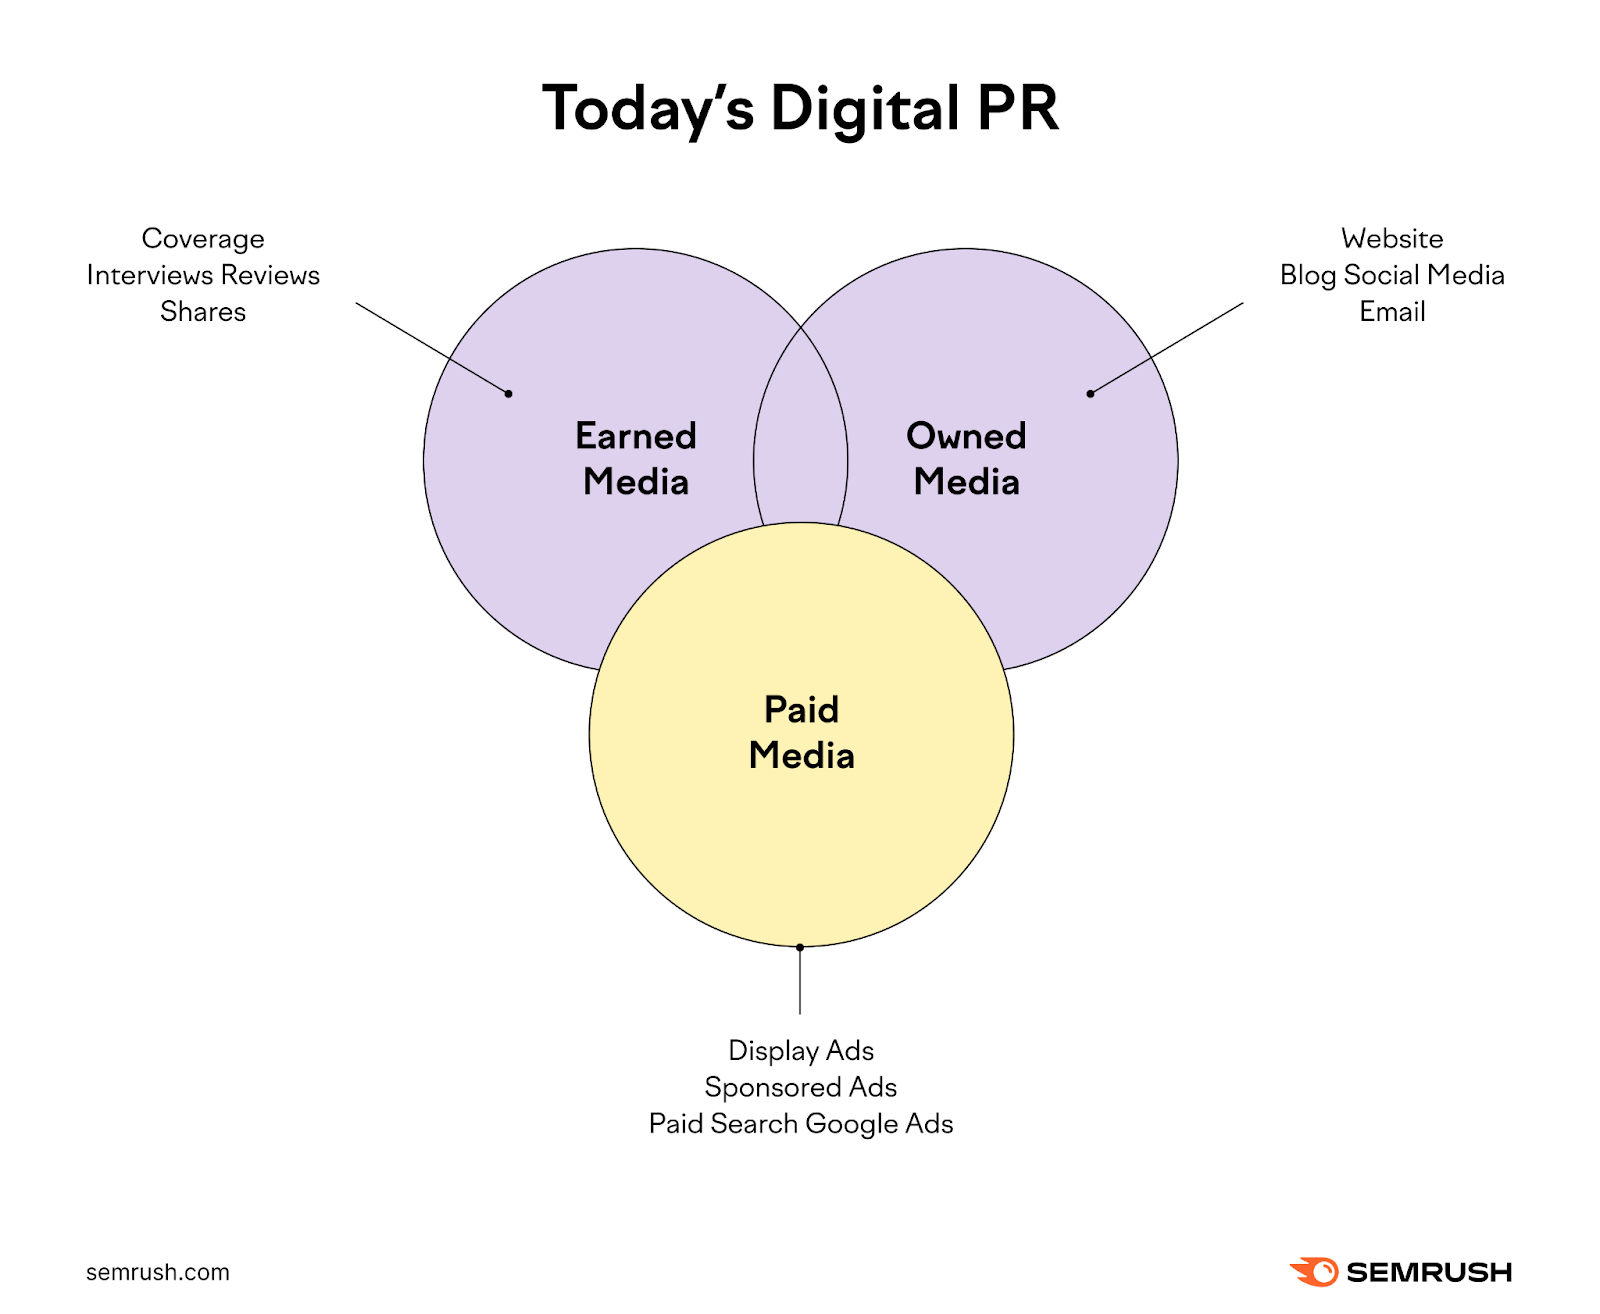 Today's digital PR infographic